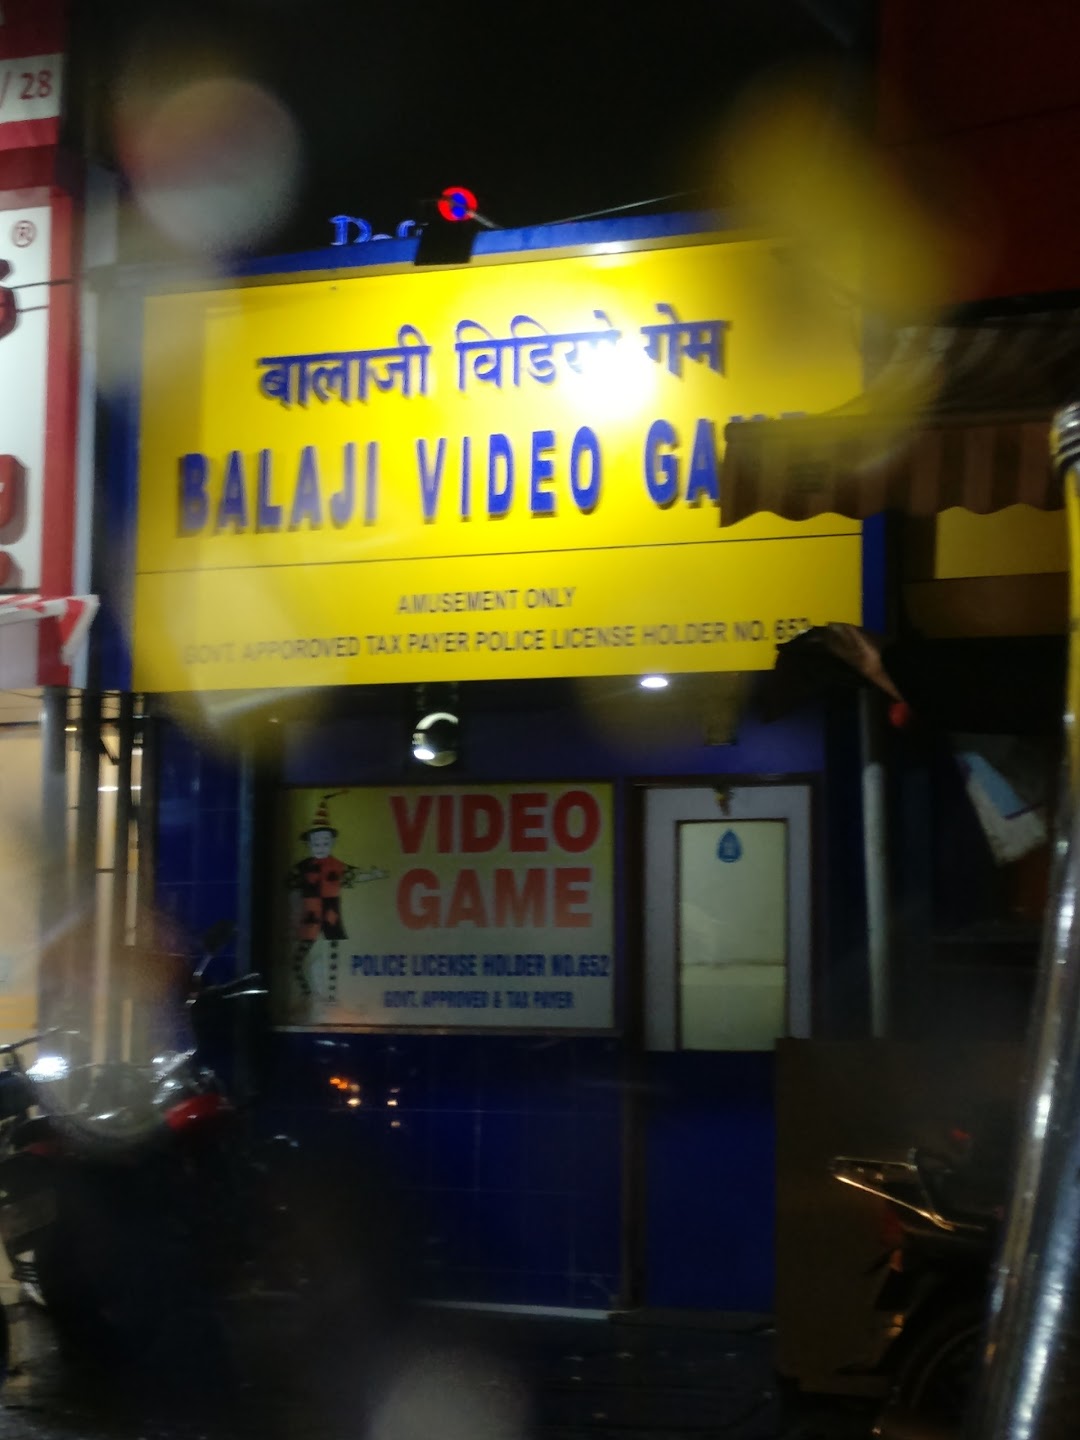 Balaji Video Game